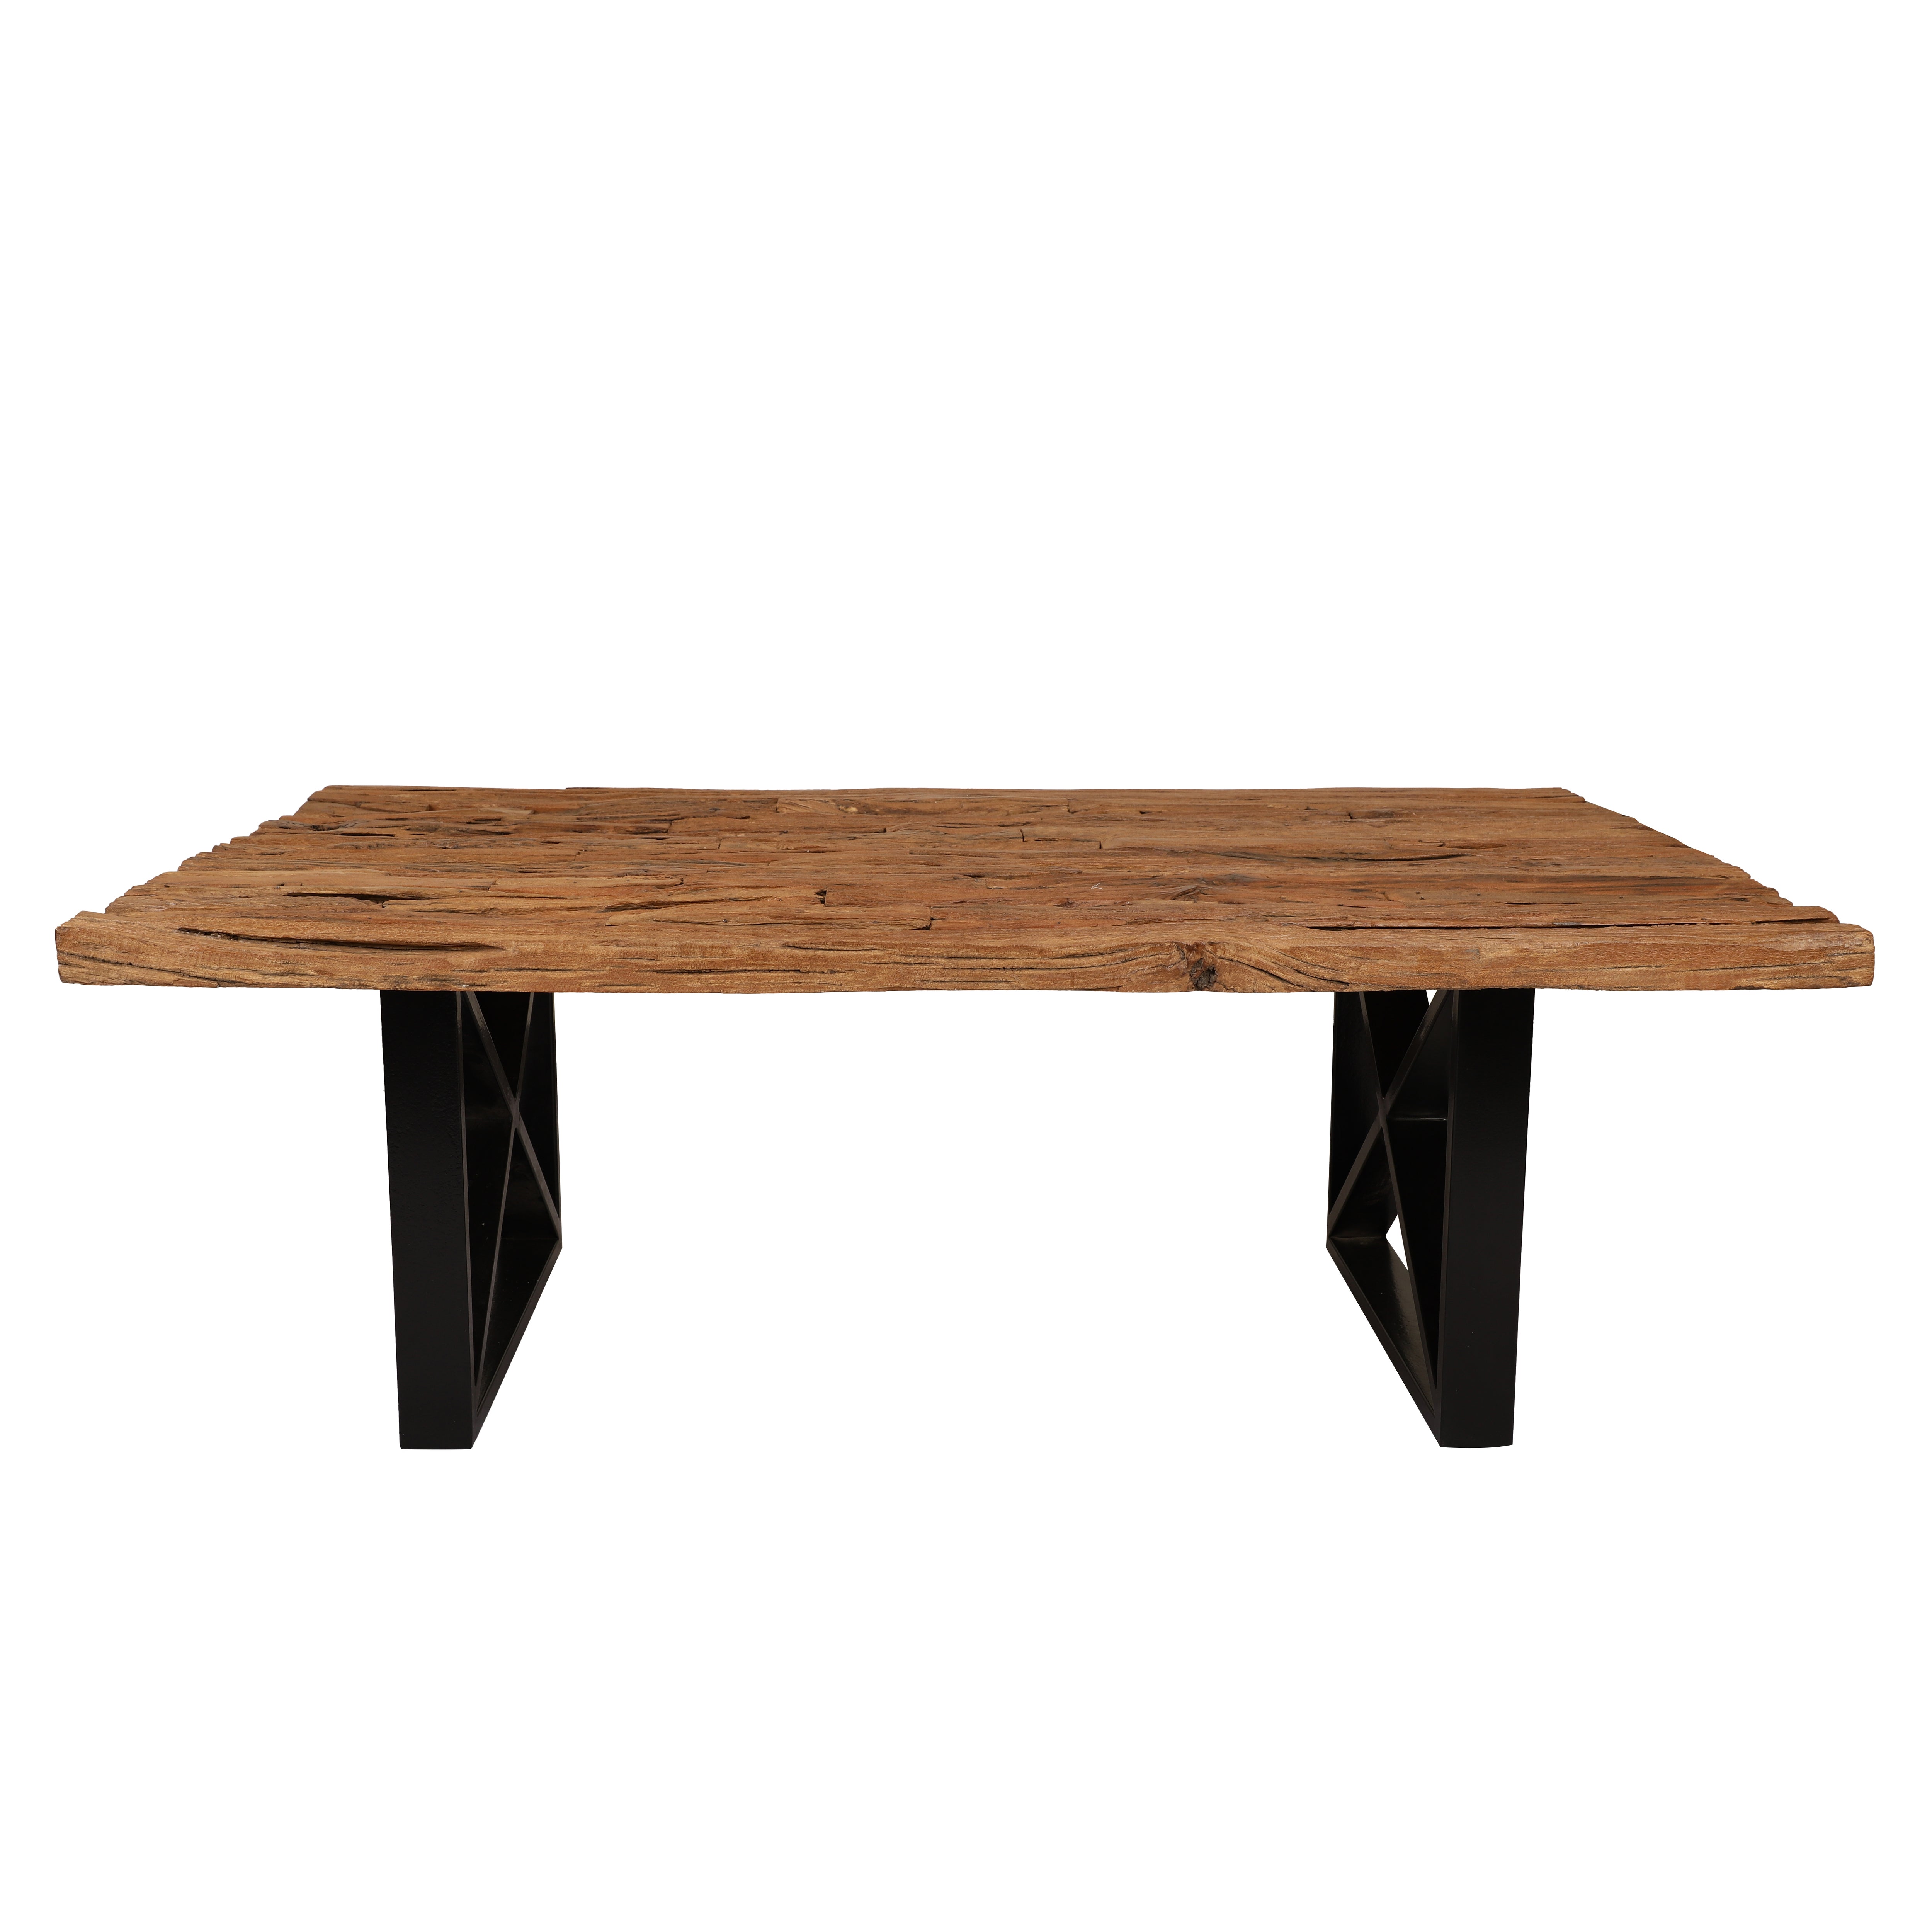 Weathered Wood Coffee Table